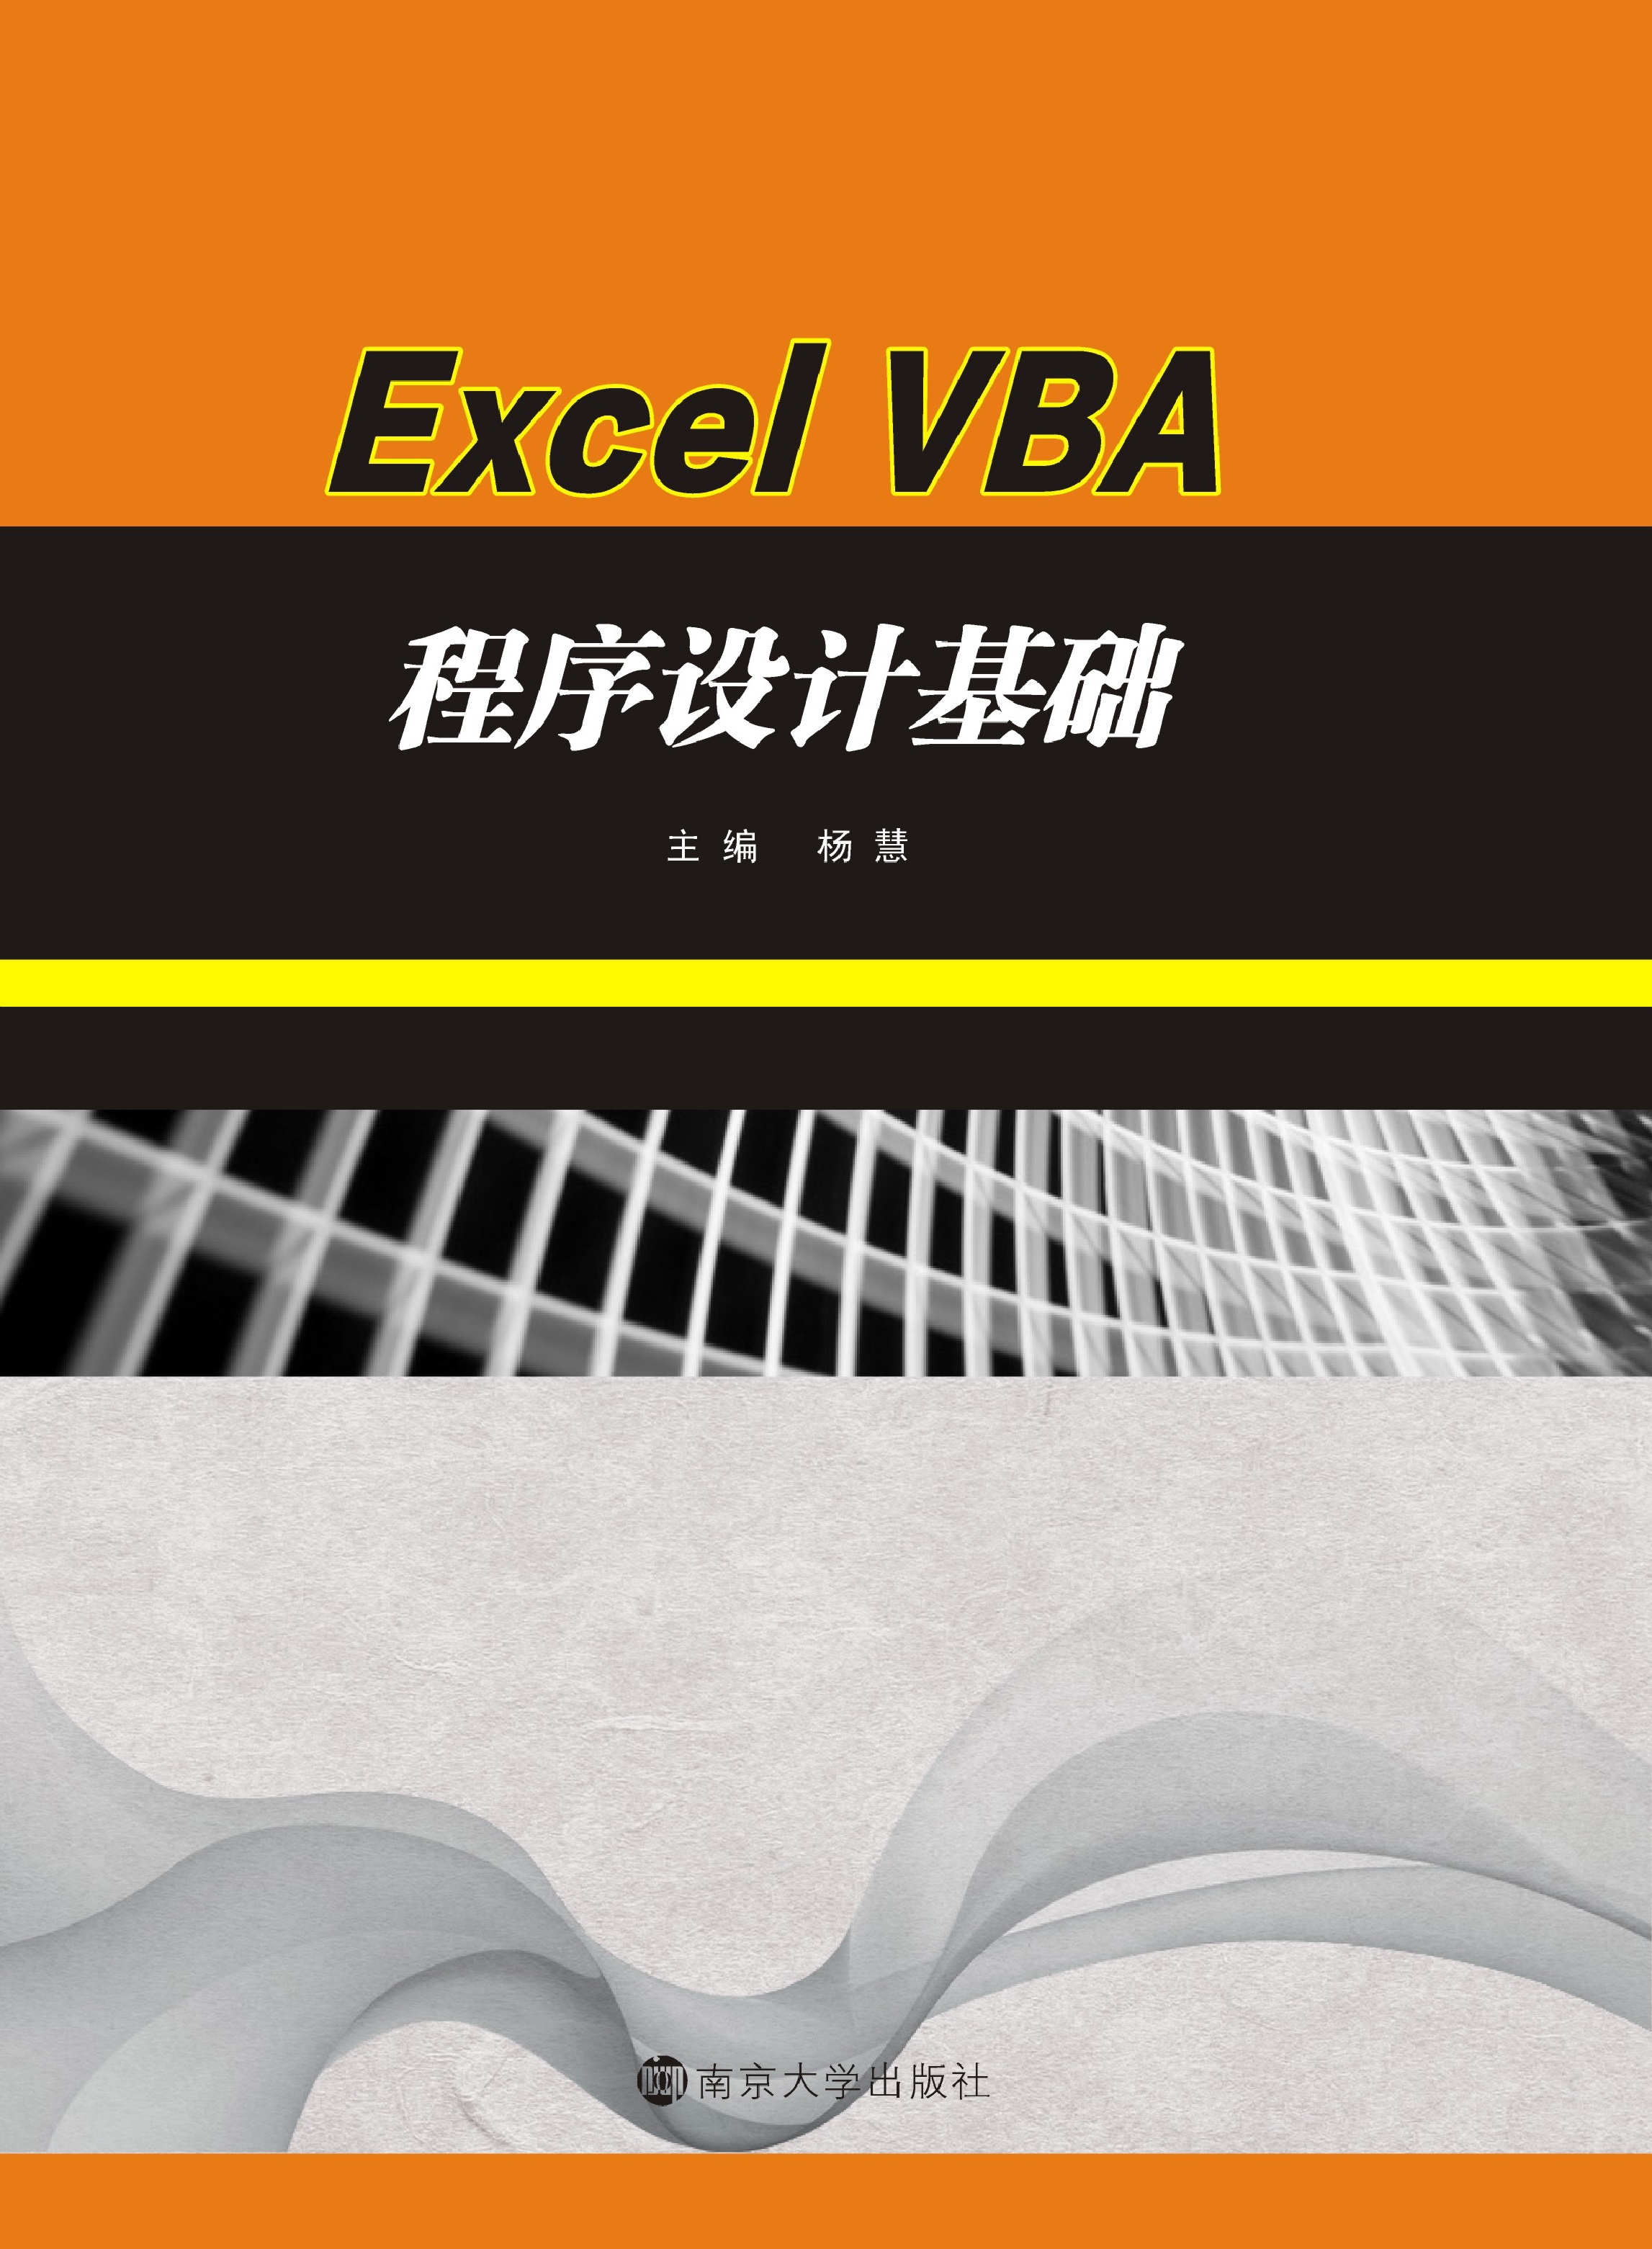 Excel VBA程序设计基础